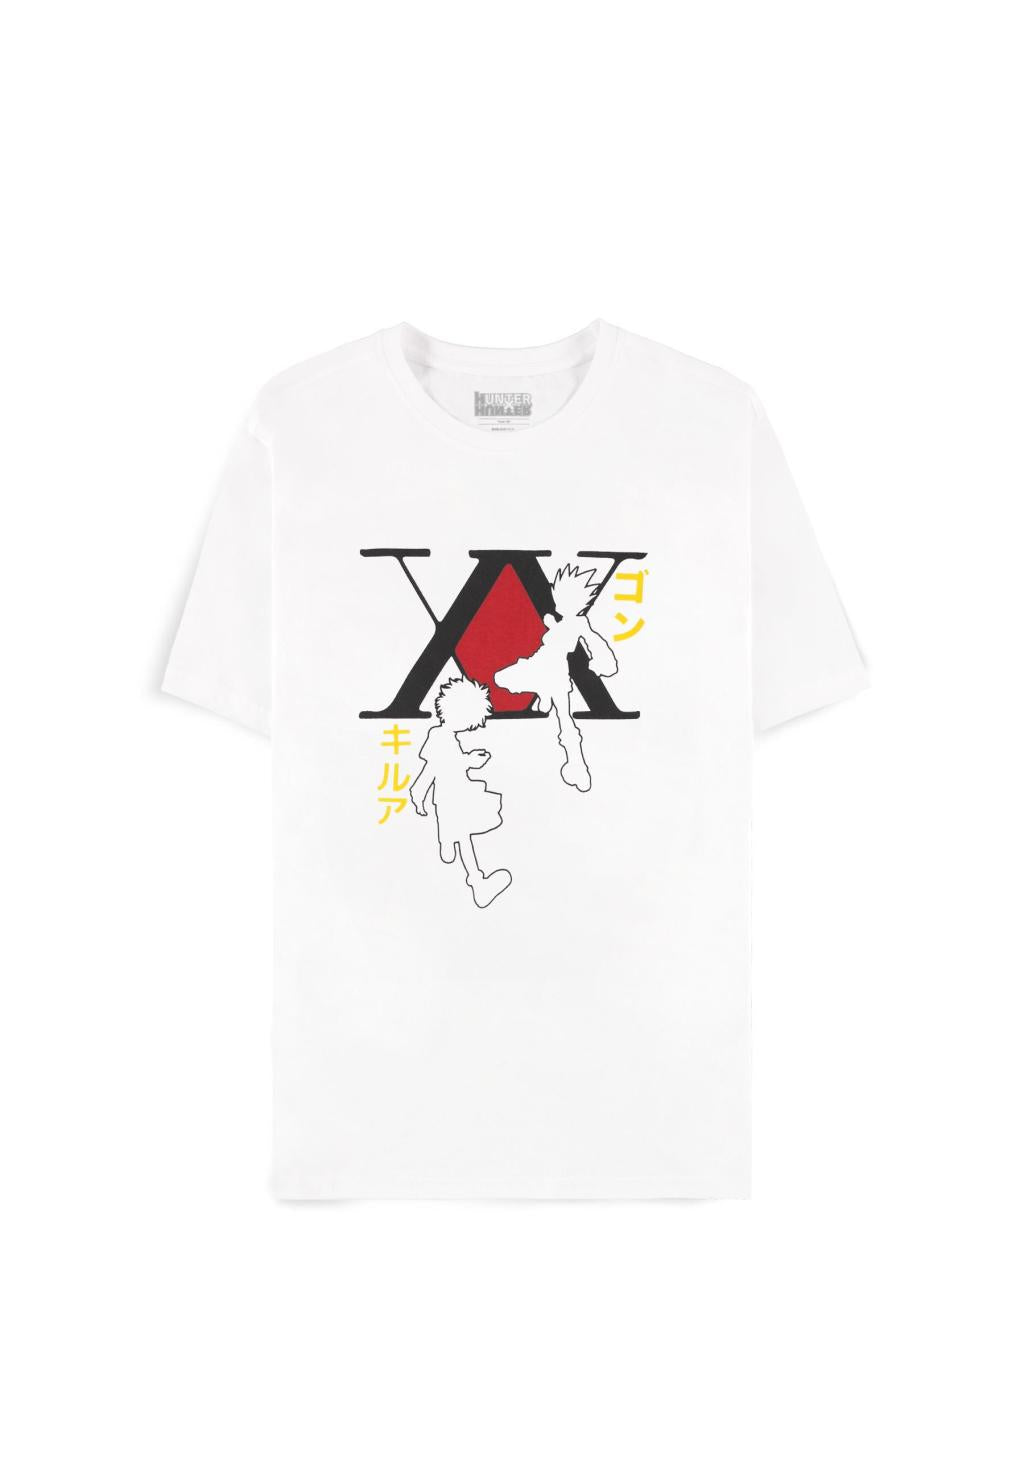 HUNTER X HUNTER - Gon & Kirua - Men's T-shirt (XXL)